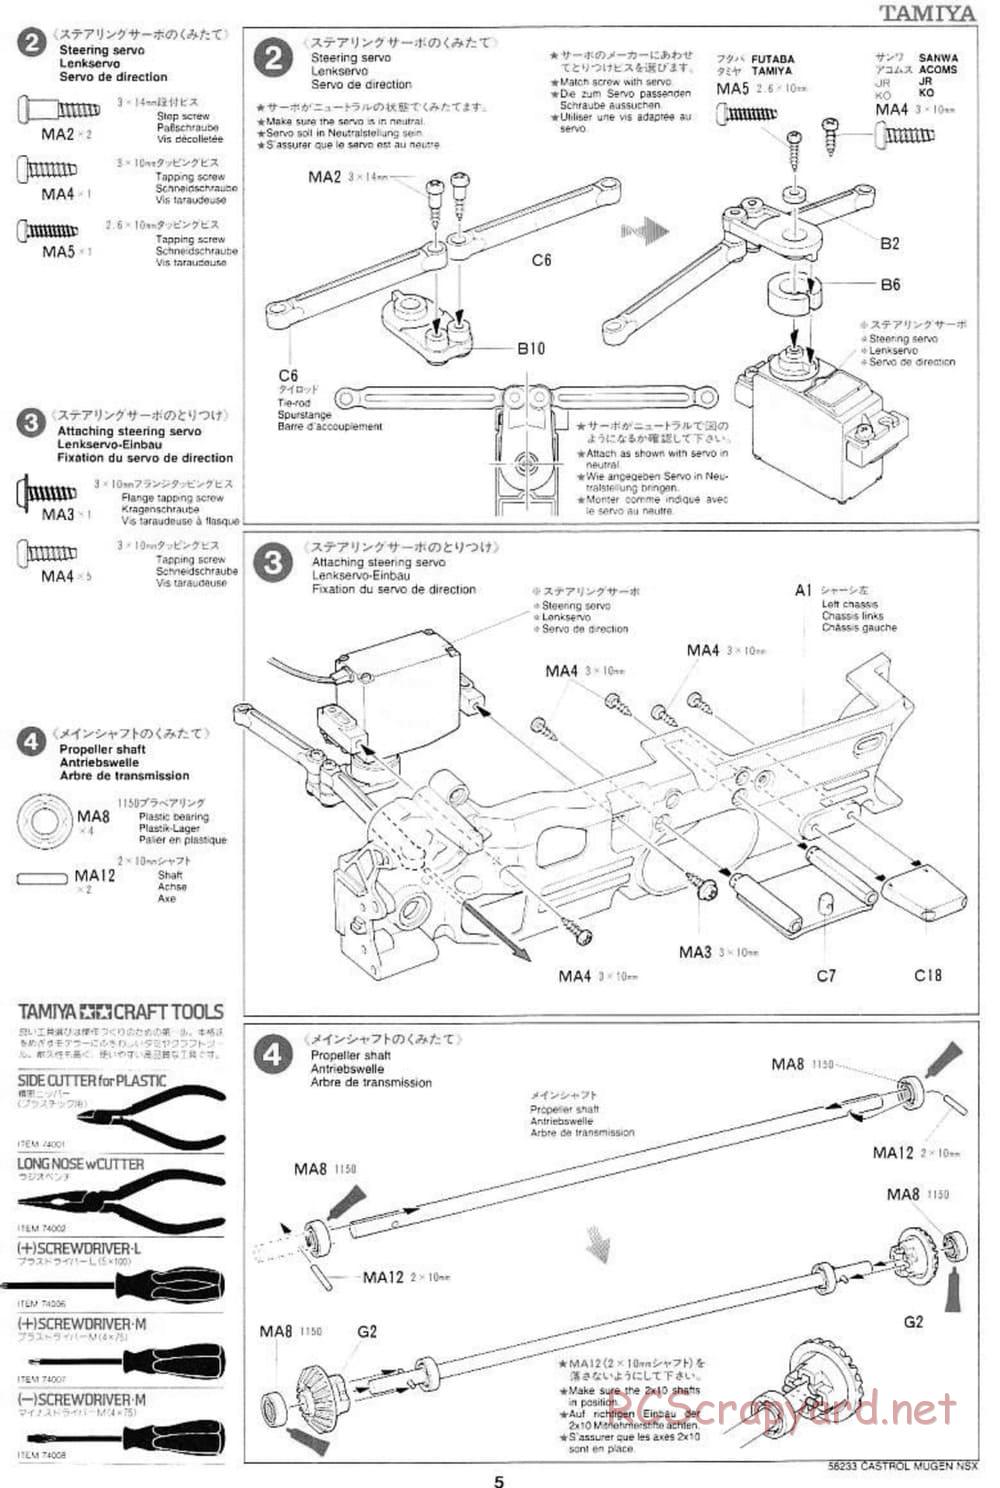 Tamiya - Castrol Mugen NSX - TL-01 Chassis - Manual - Page 5